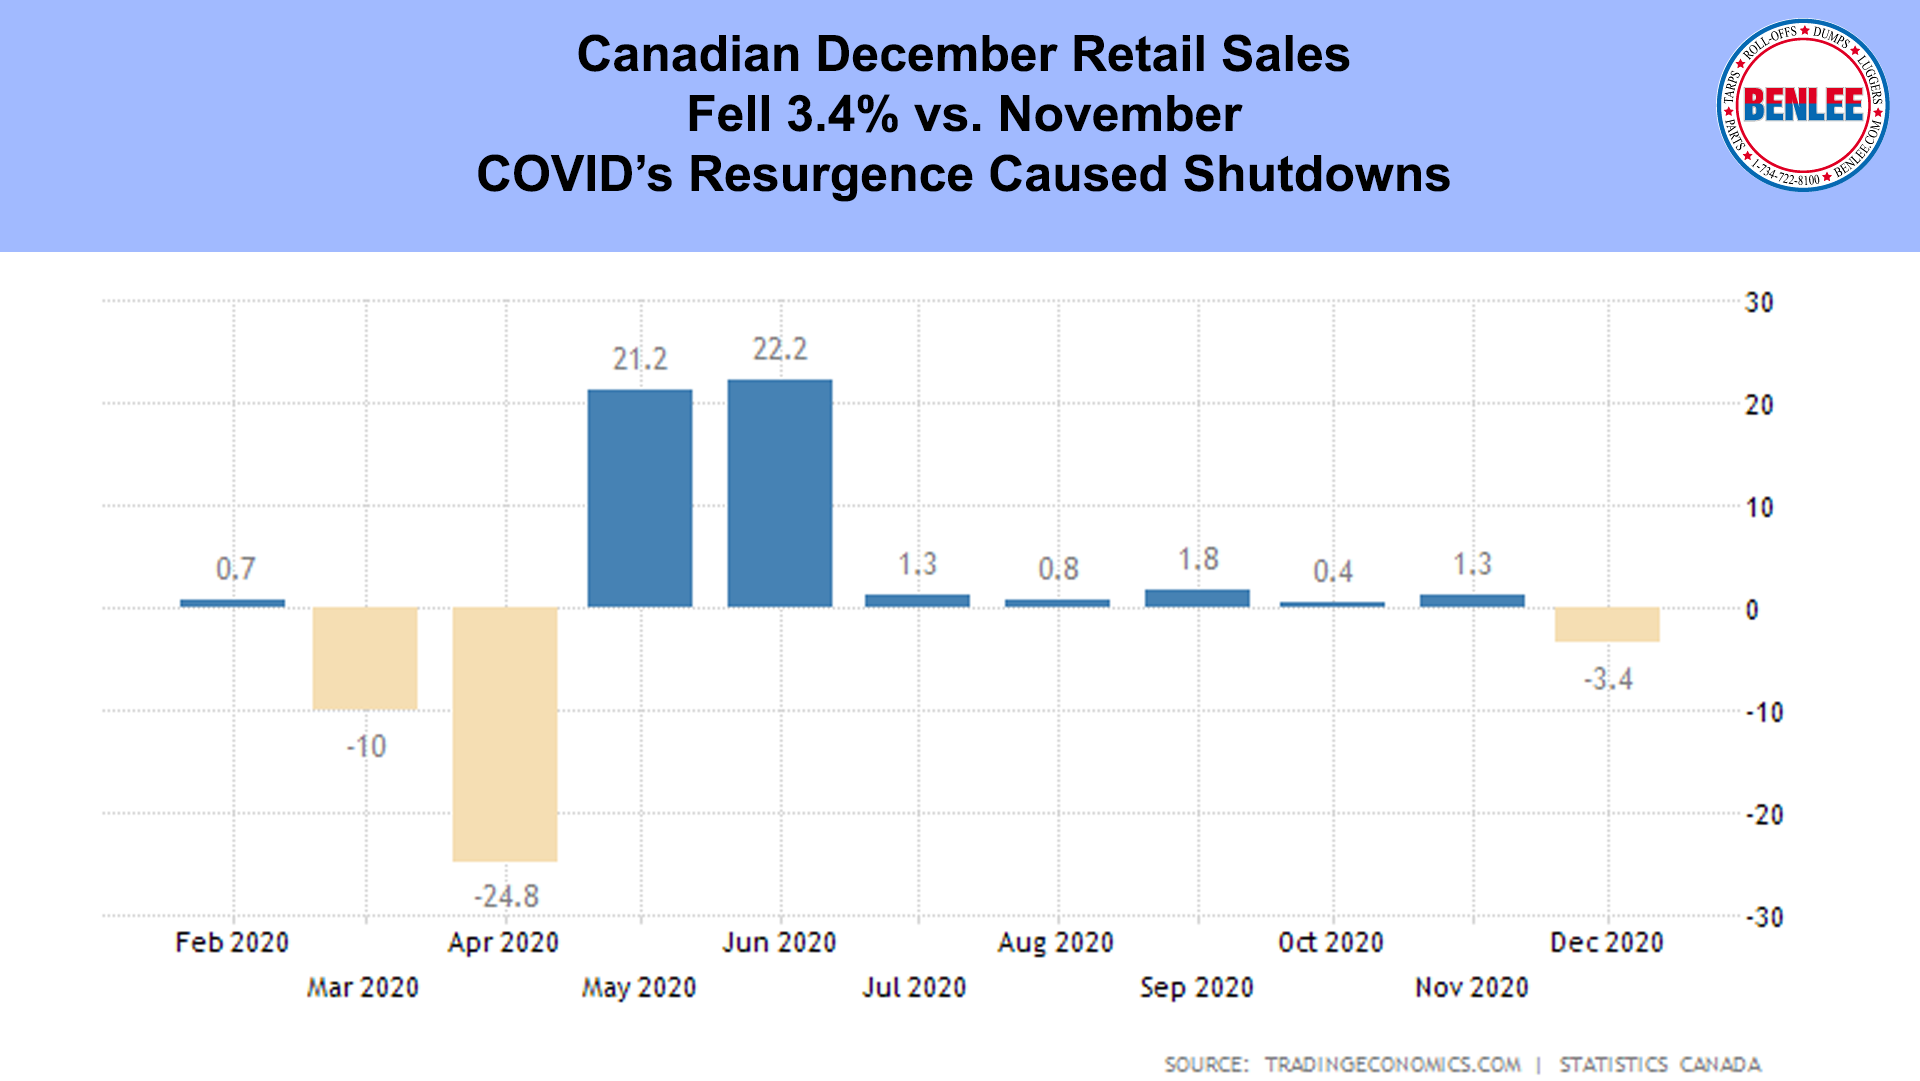 Canadian December Retail Sales